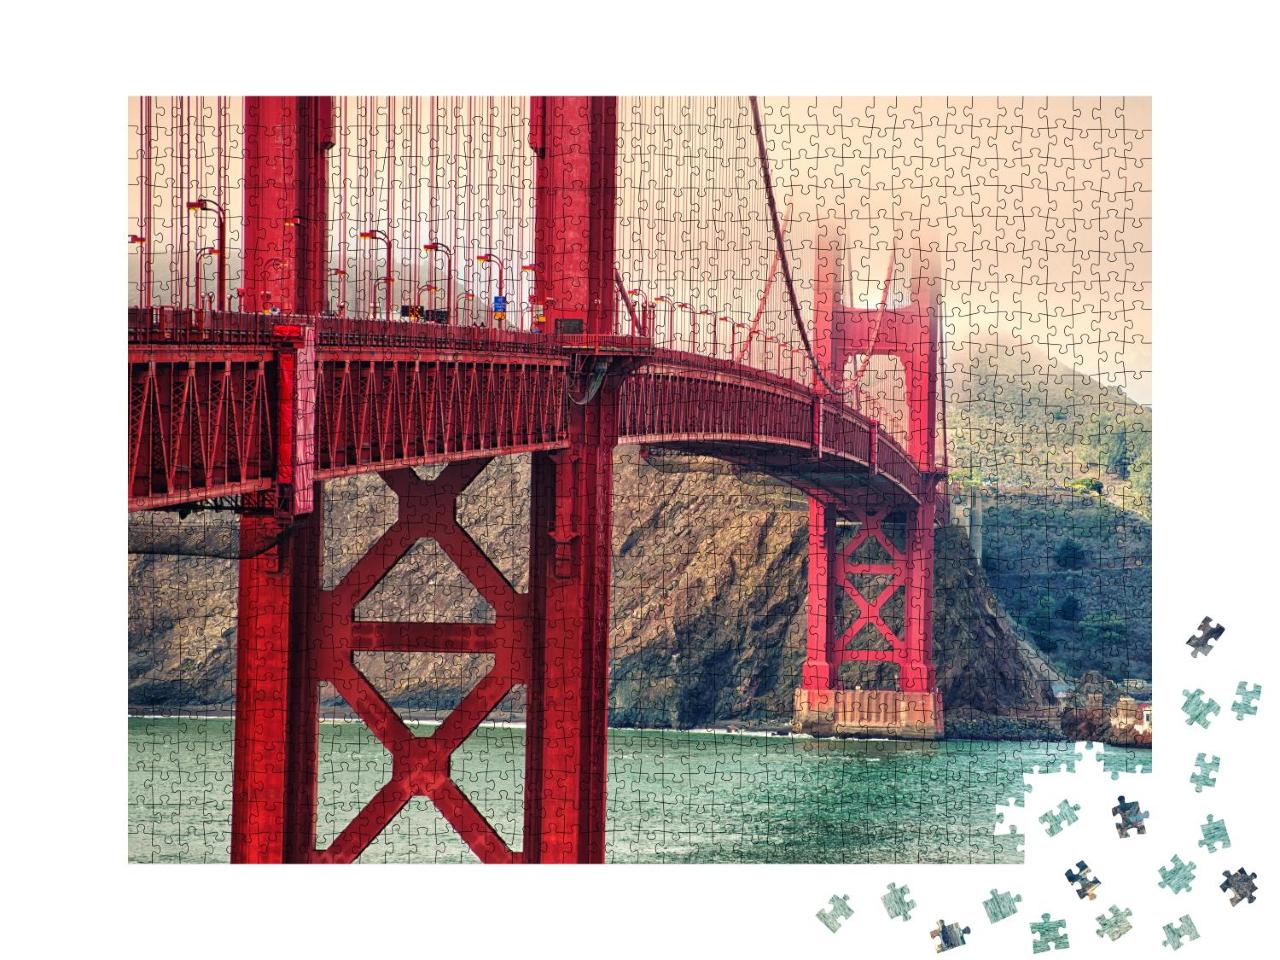 Puzzle 1000 Teile „Golden Gate Bridge“